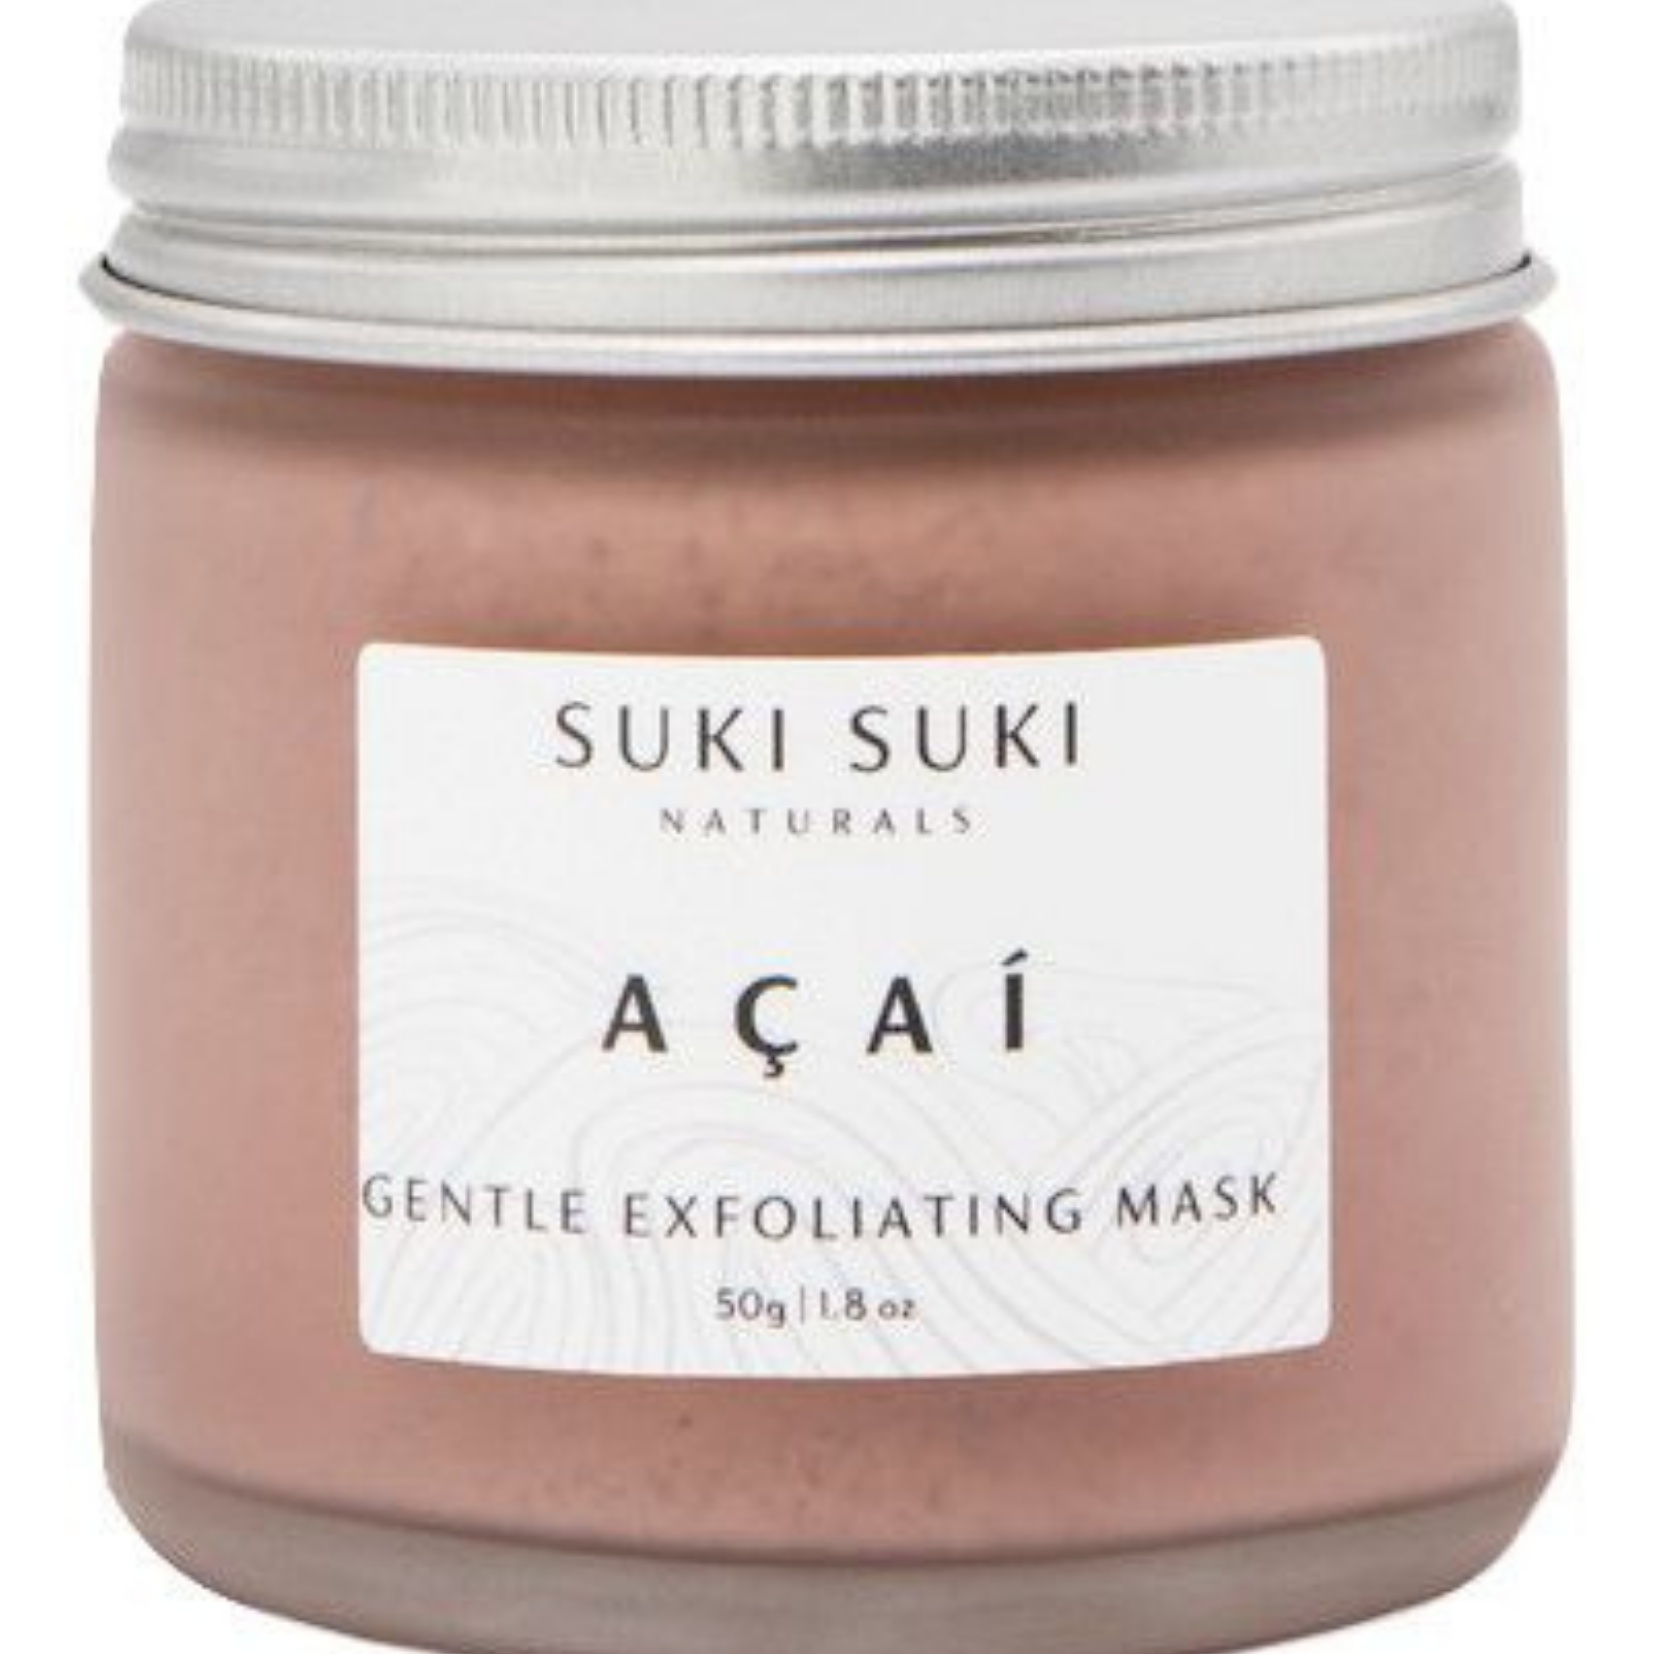 Suki suki Açaí Gentle Exfoliating Mask